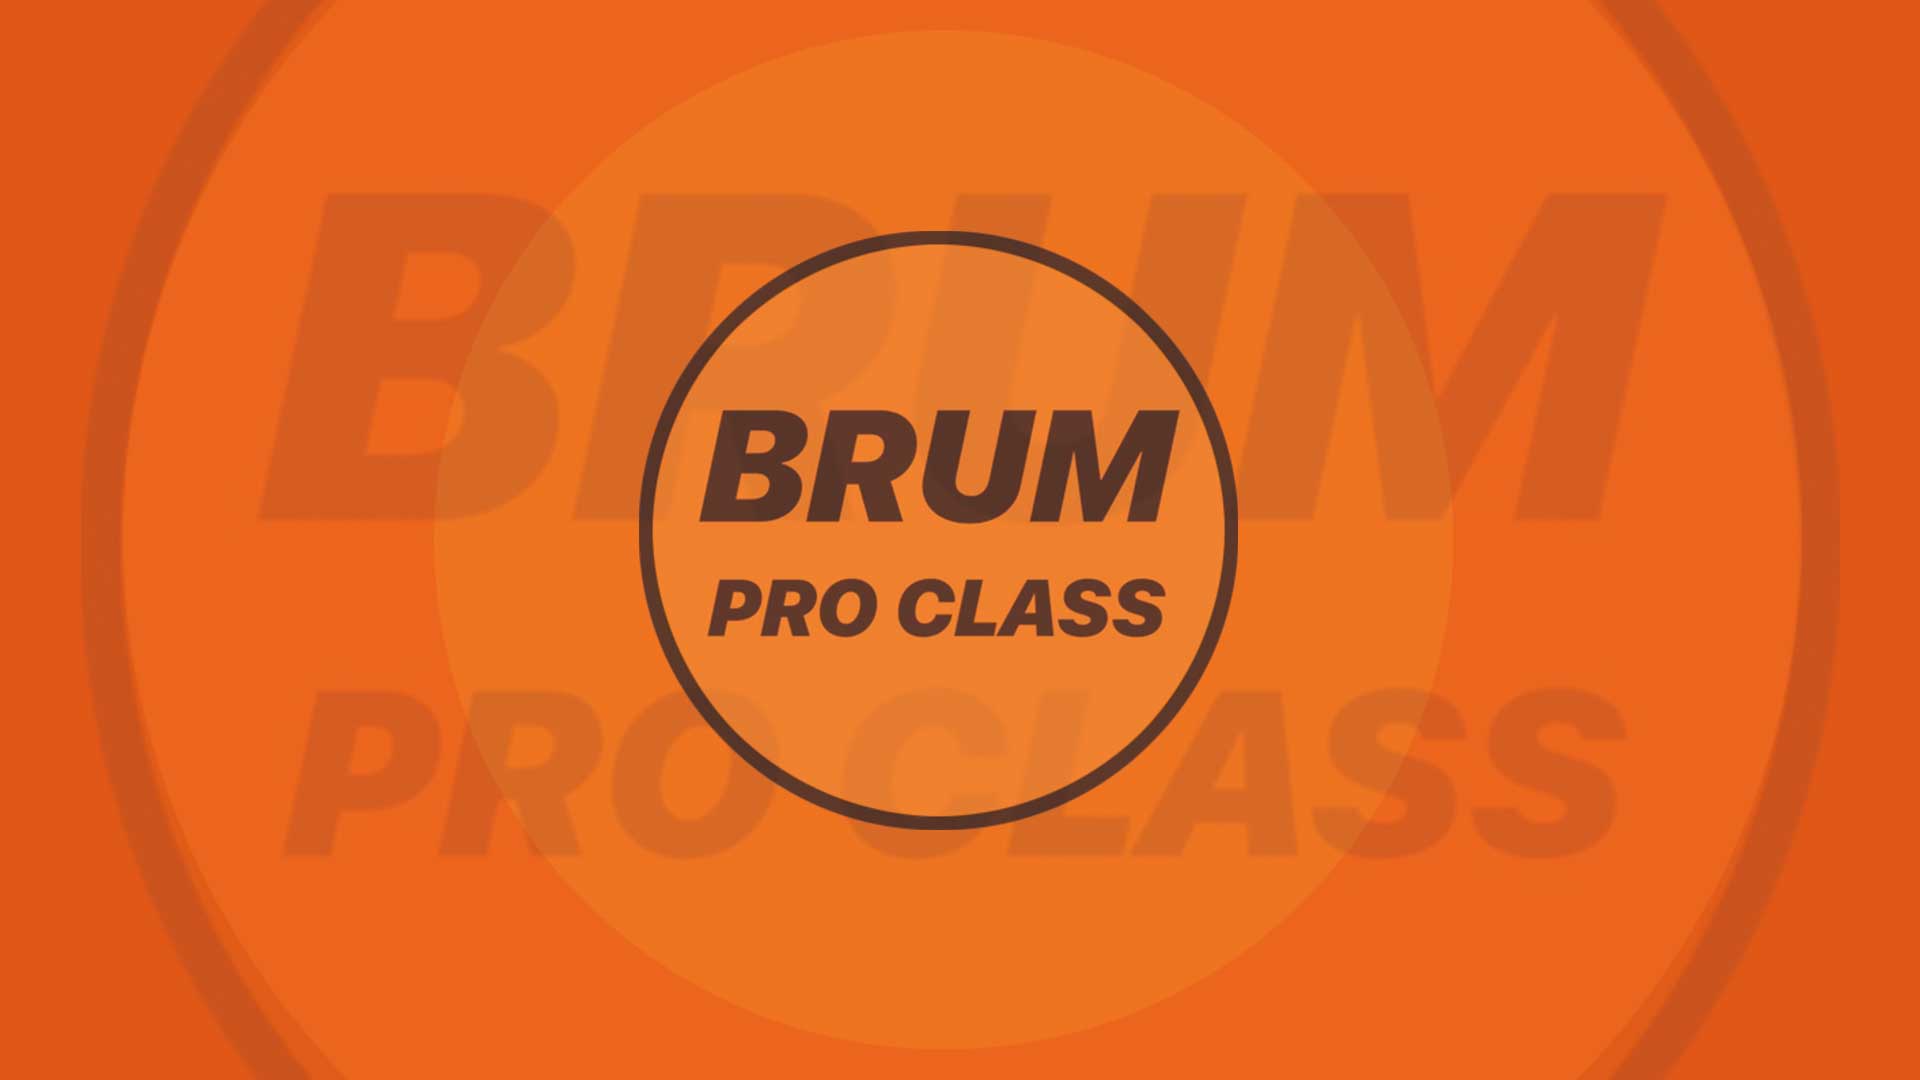 20 Jul 2023 – 10:00 @ ACE Dance & Music Brum Pro Class w/ Ashley Jordan